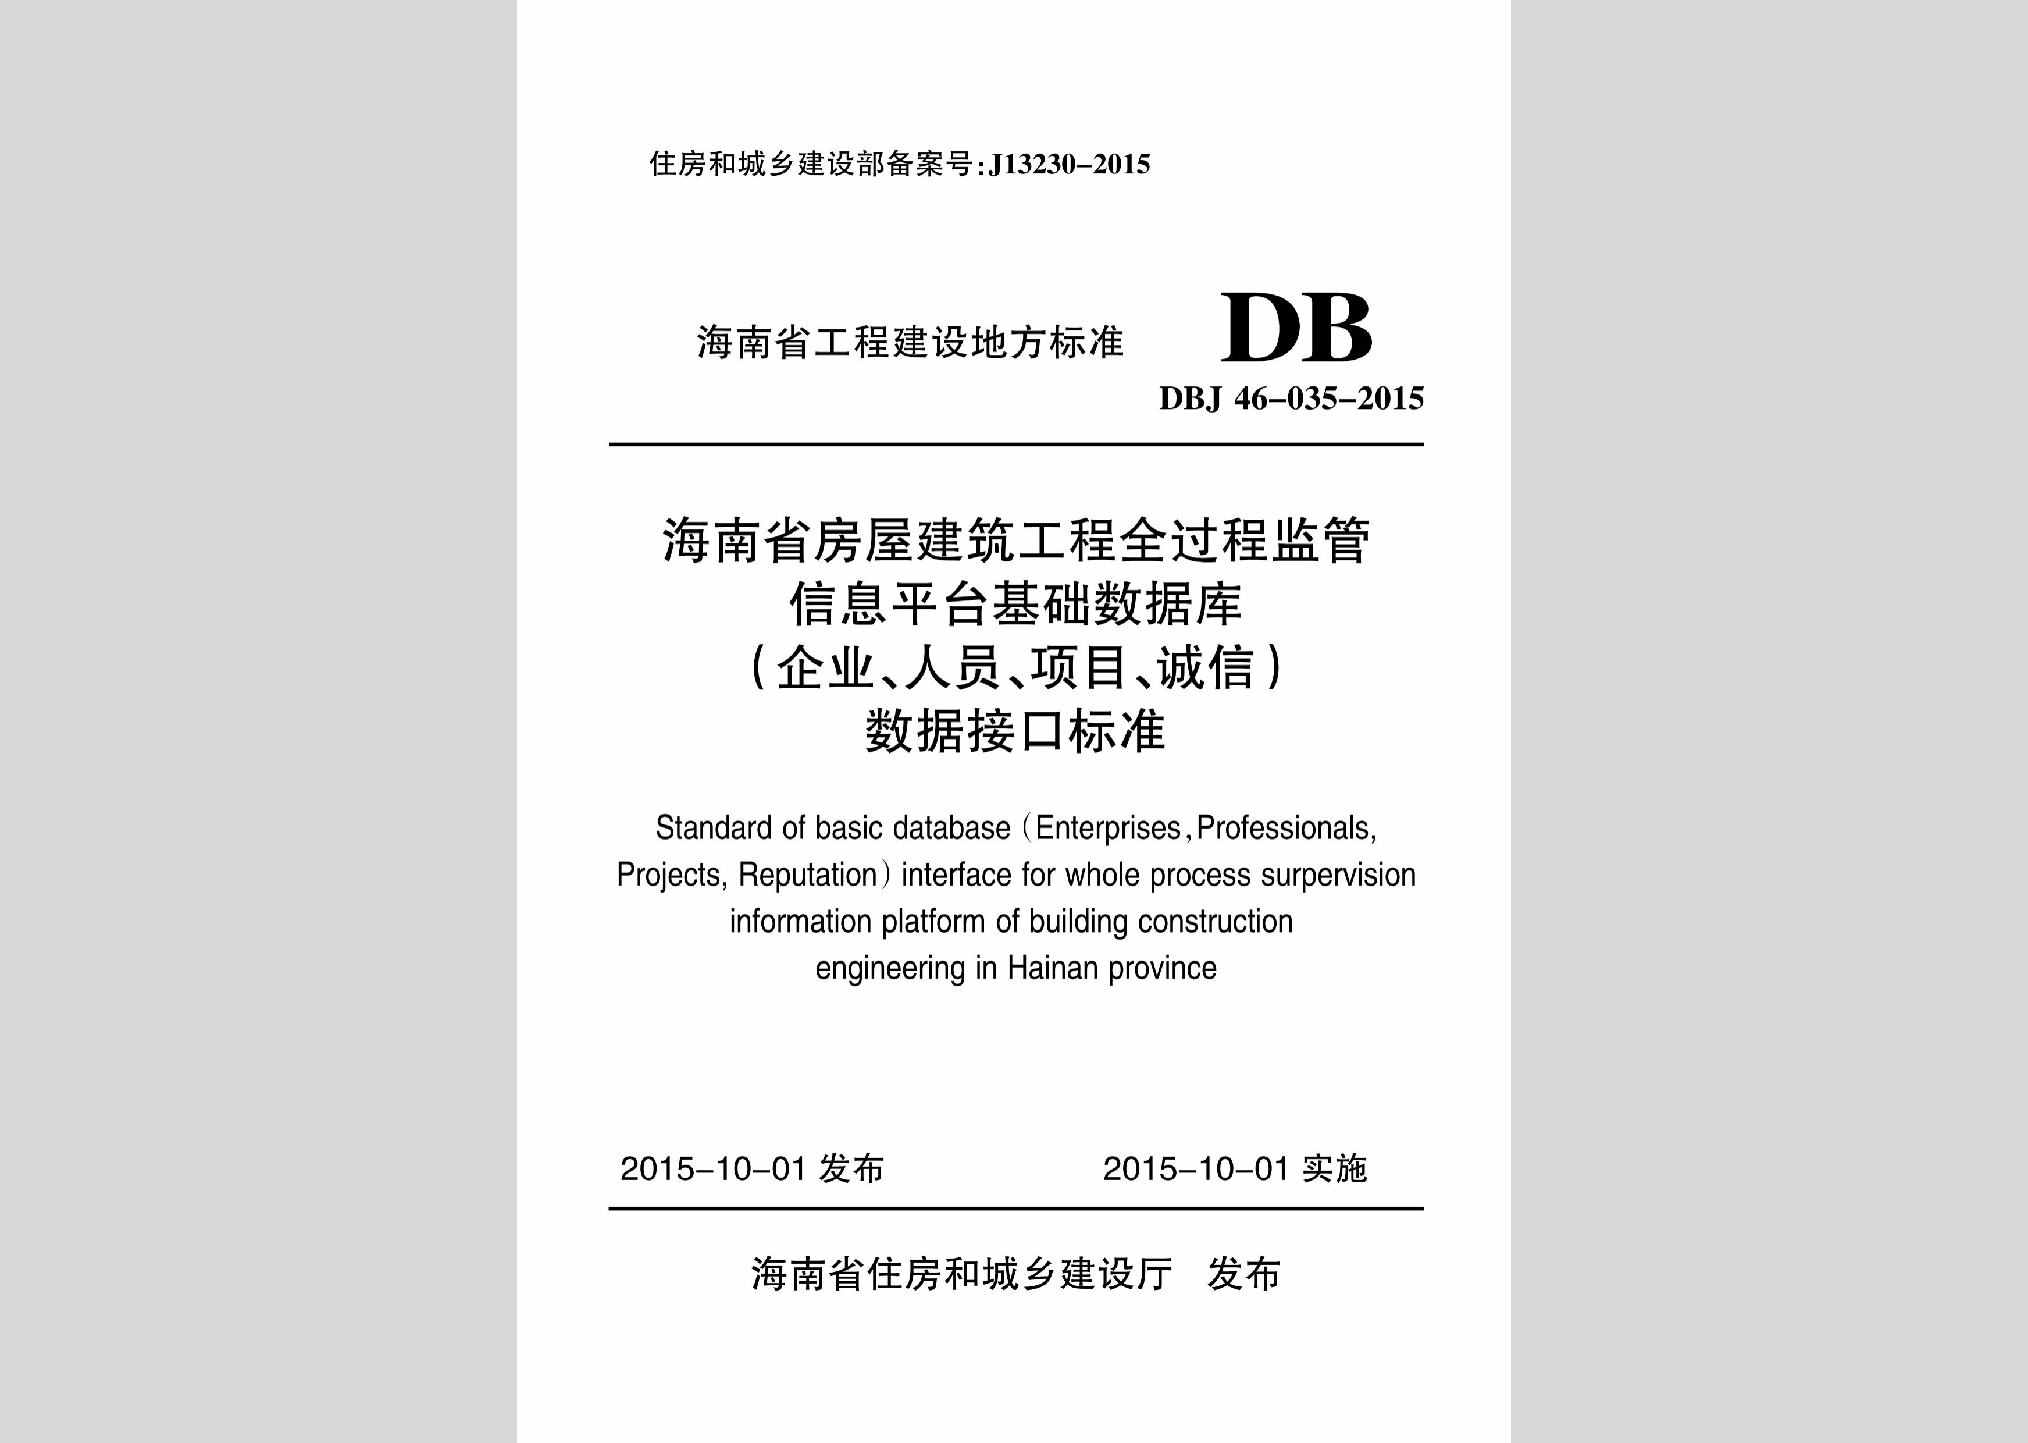 DBJ46-035-2015：海南省房屋建筑工程全过程监管信息平台基础数据库(企业、人员、项目、诚信)数据接口标准